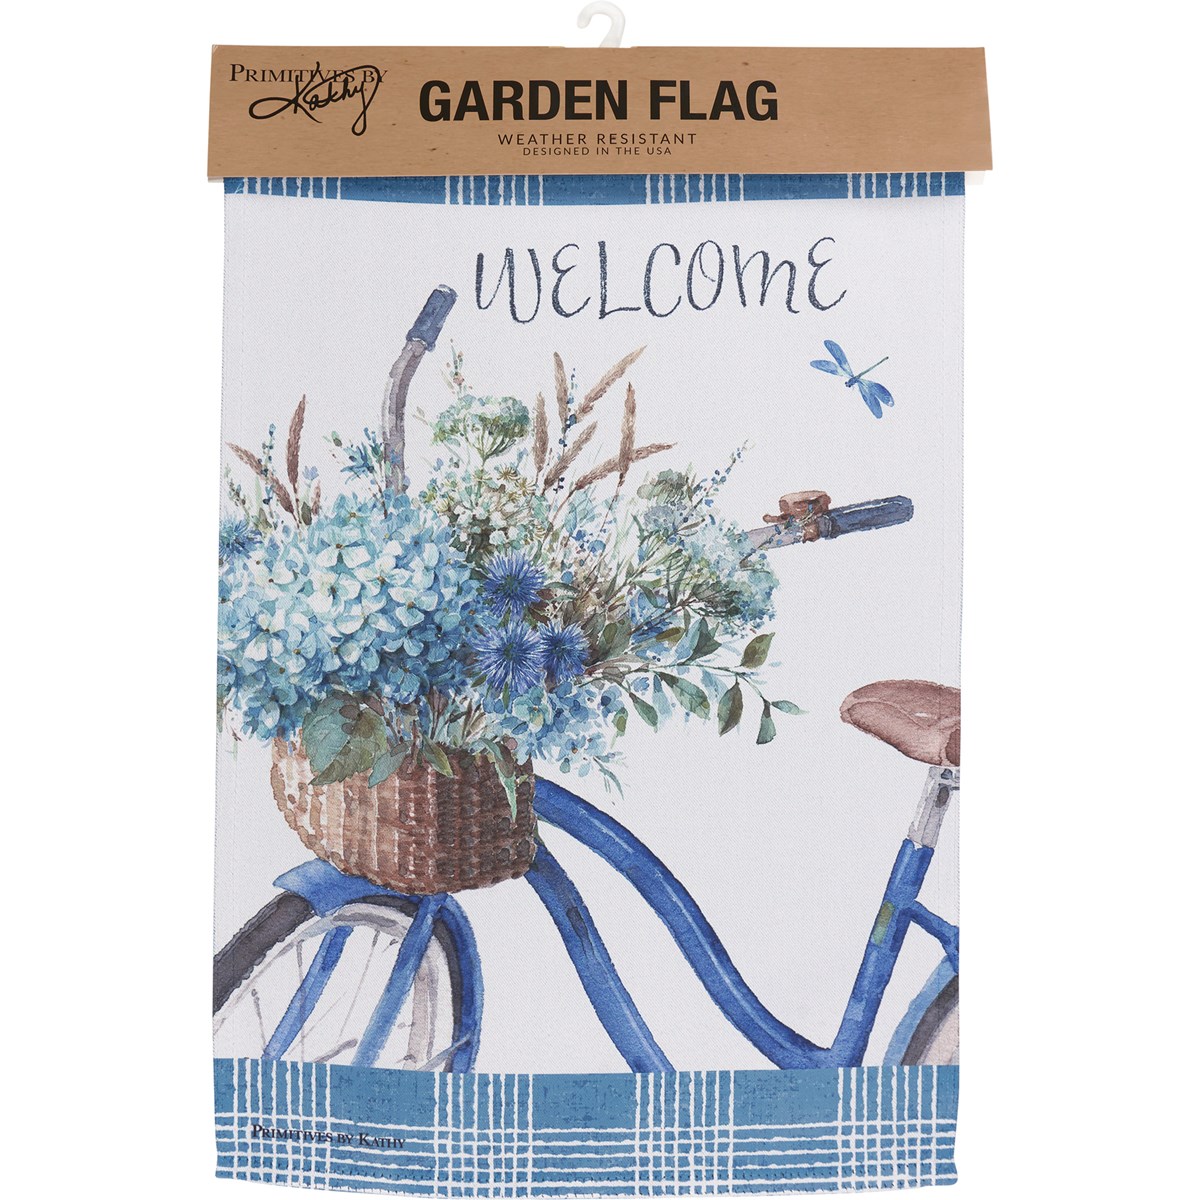 Welcome Bike Garden Flag - Polyester